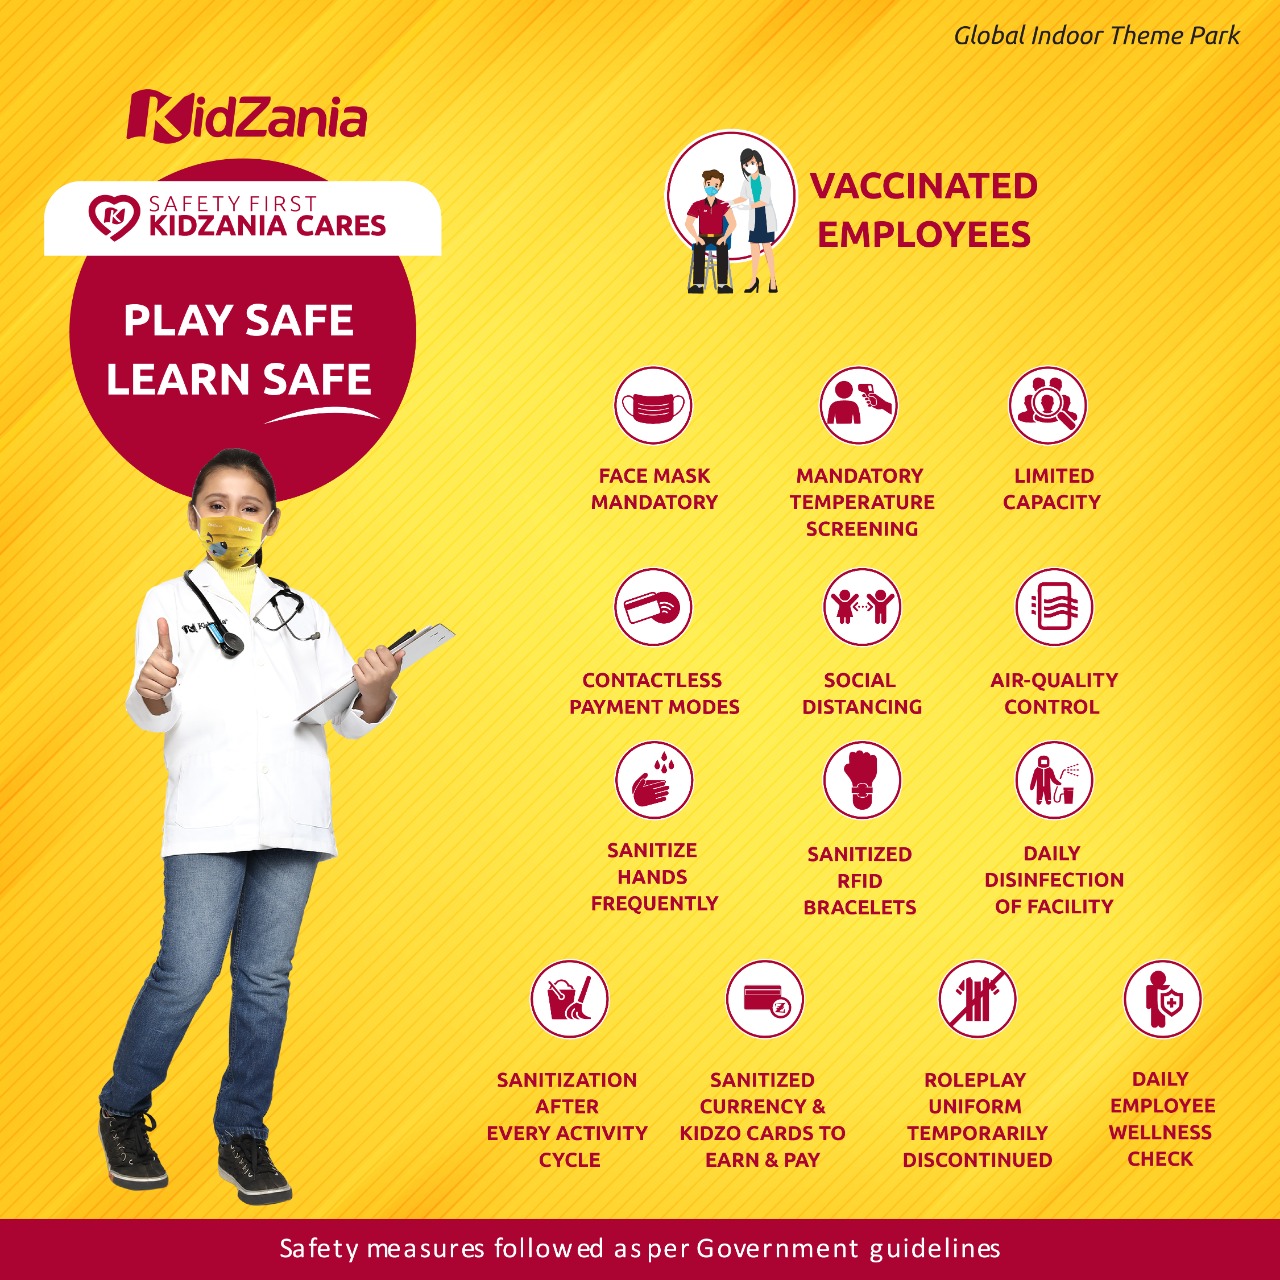 KidZania safety measures